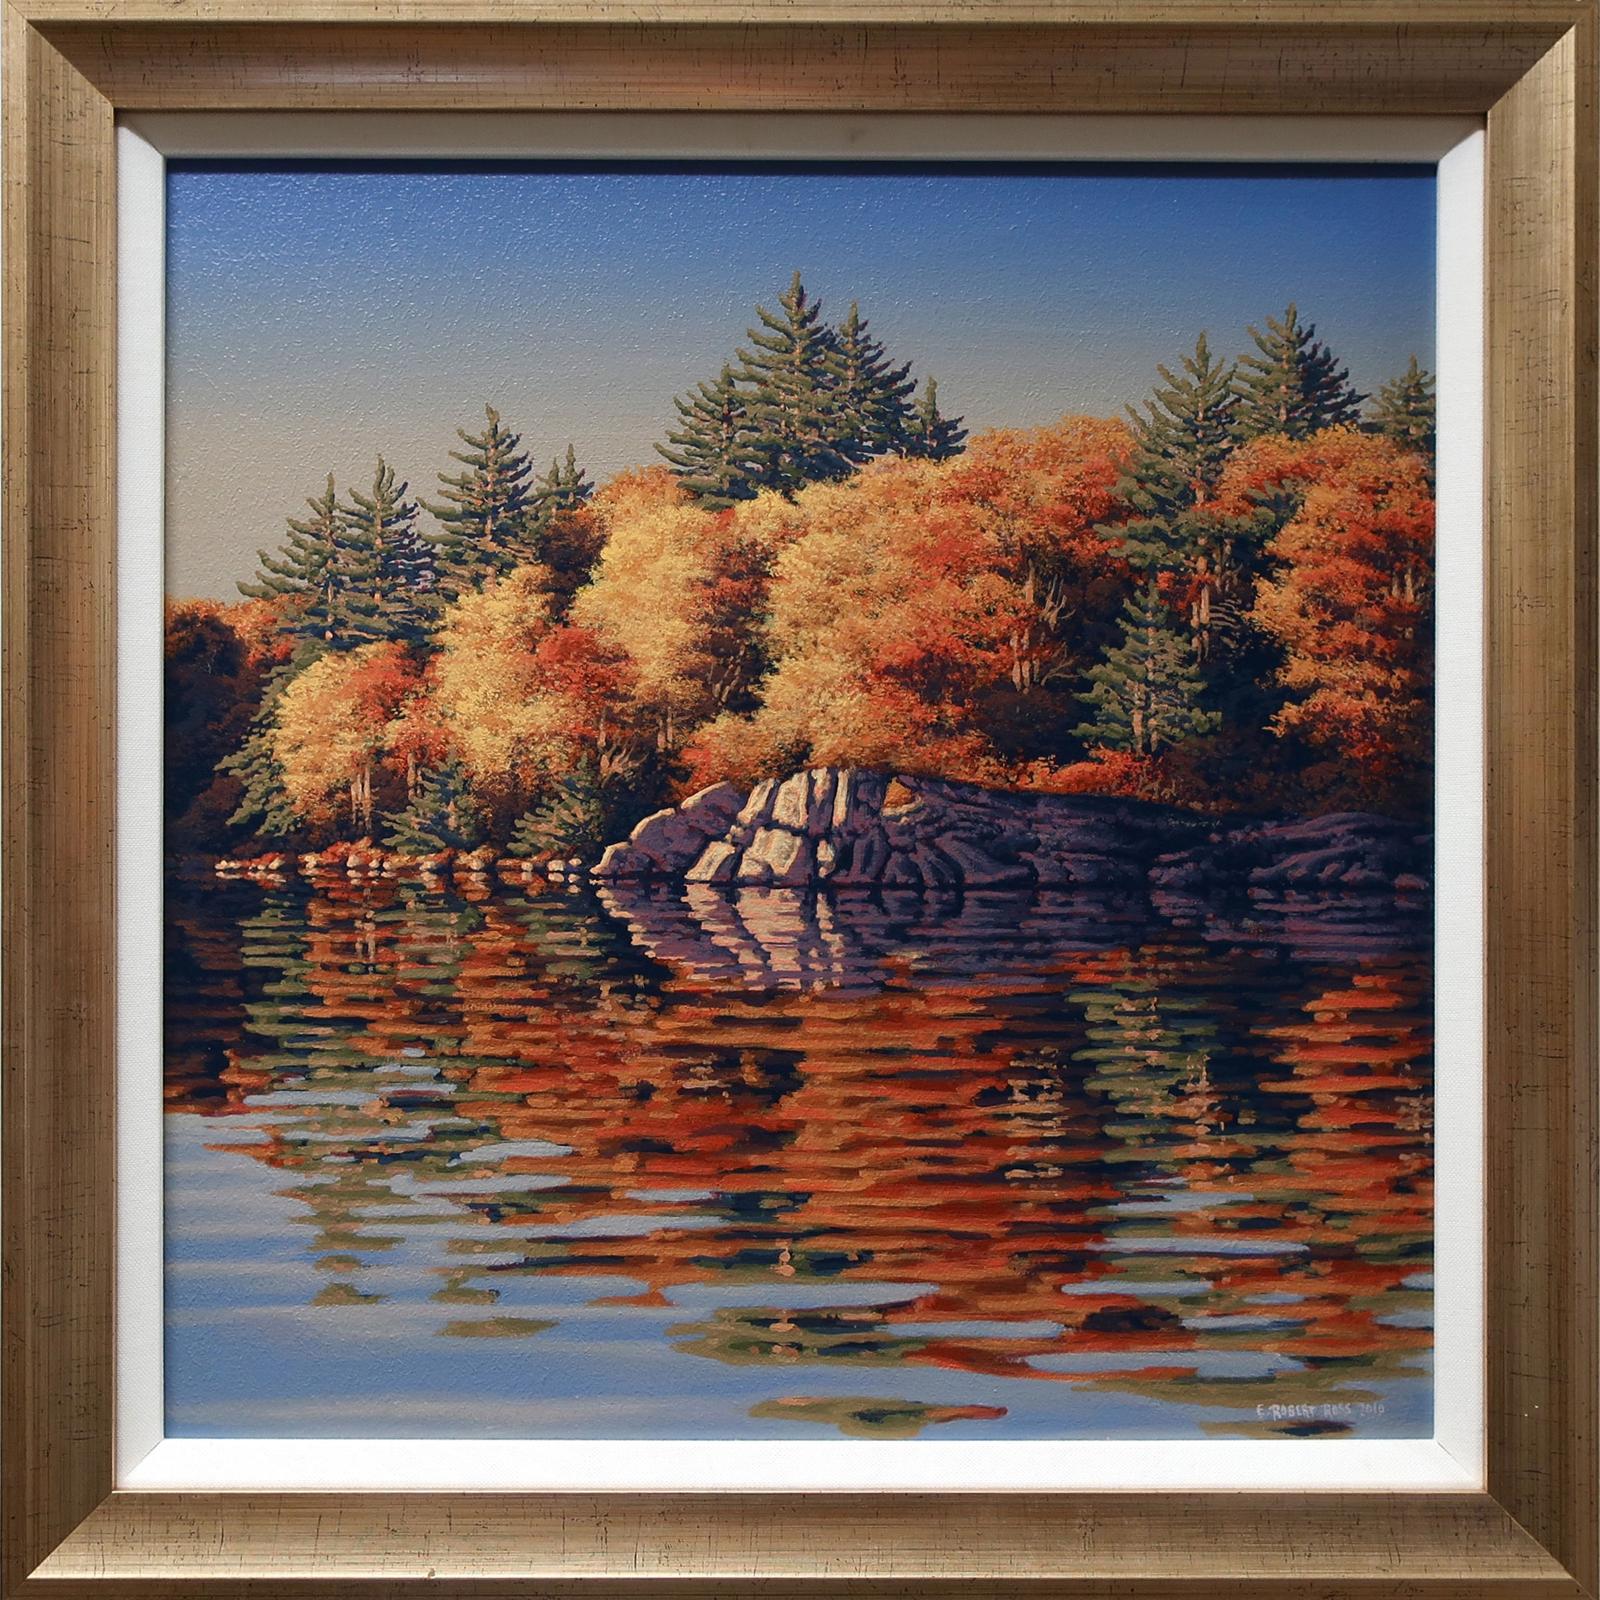 E. Robert Ross (1950) - Carlisle Lake, Killarney Park, Ontario, Canada